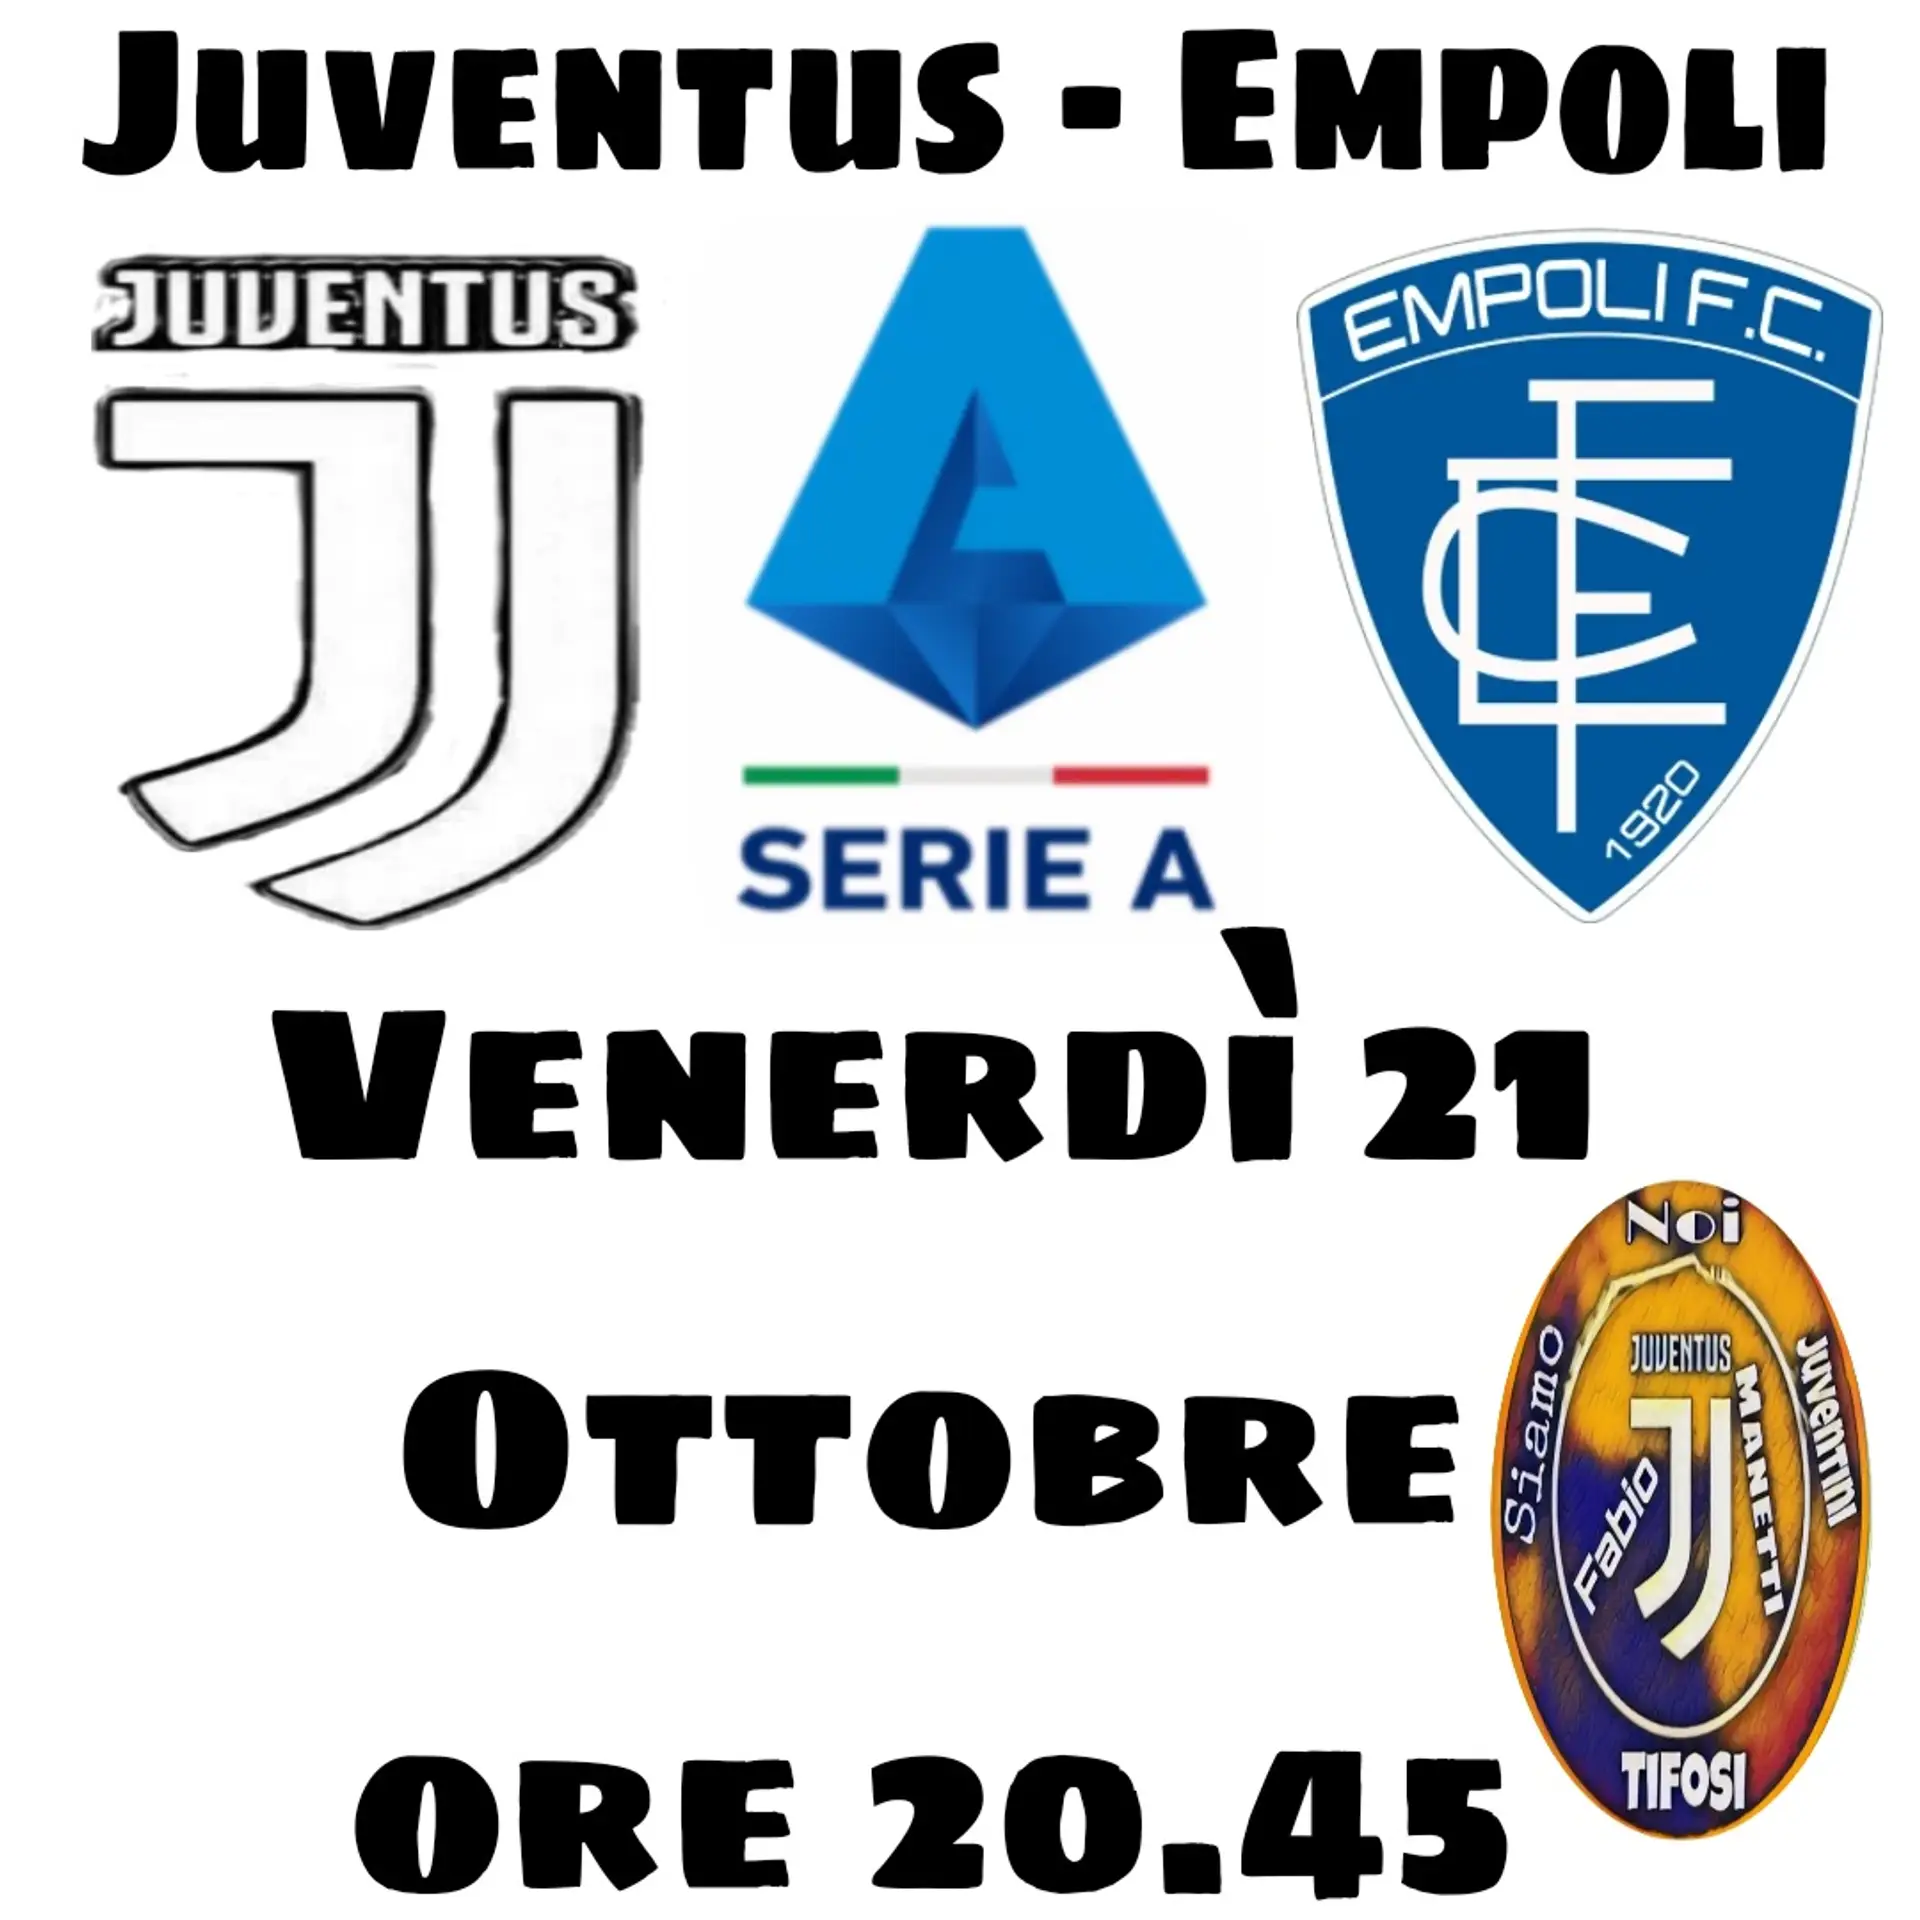 Juventus -Empoli venerdì 21 Ottobre ore 20.45